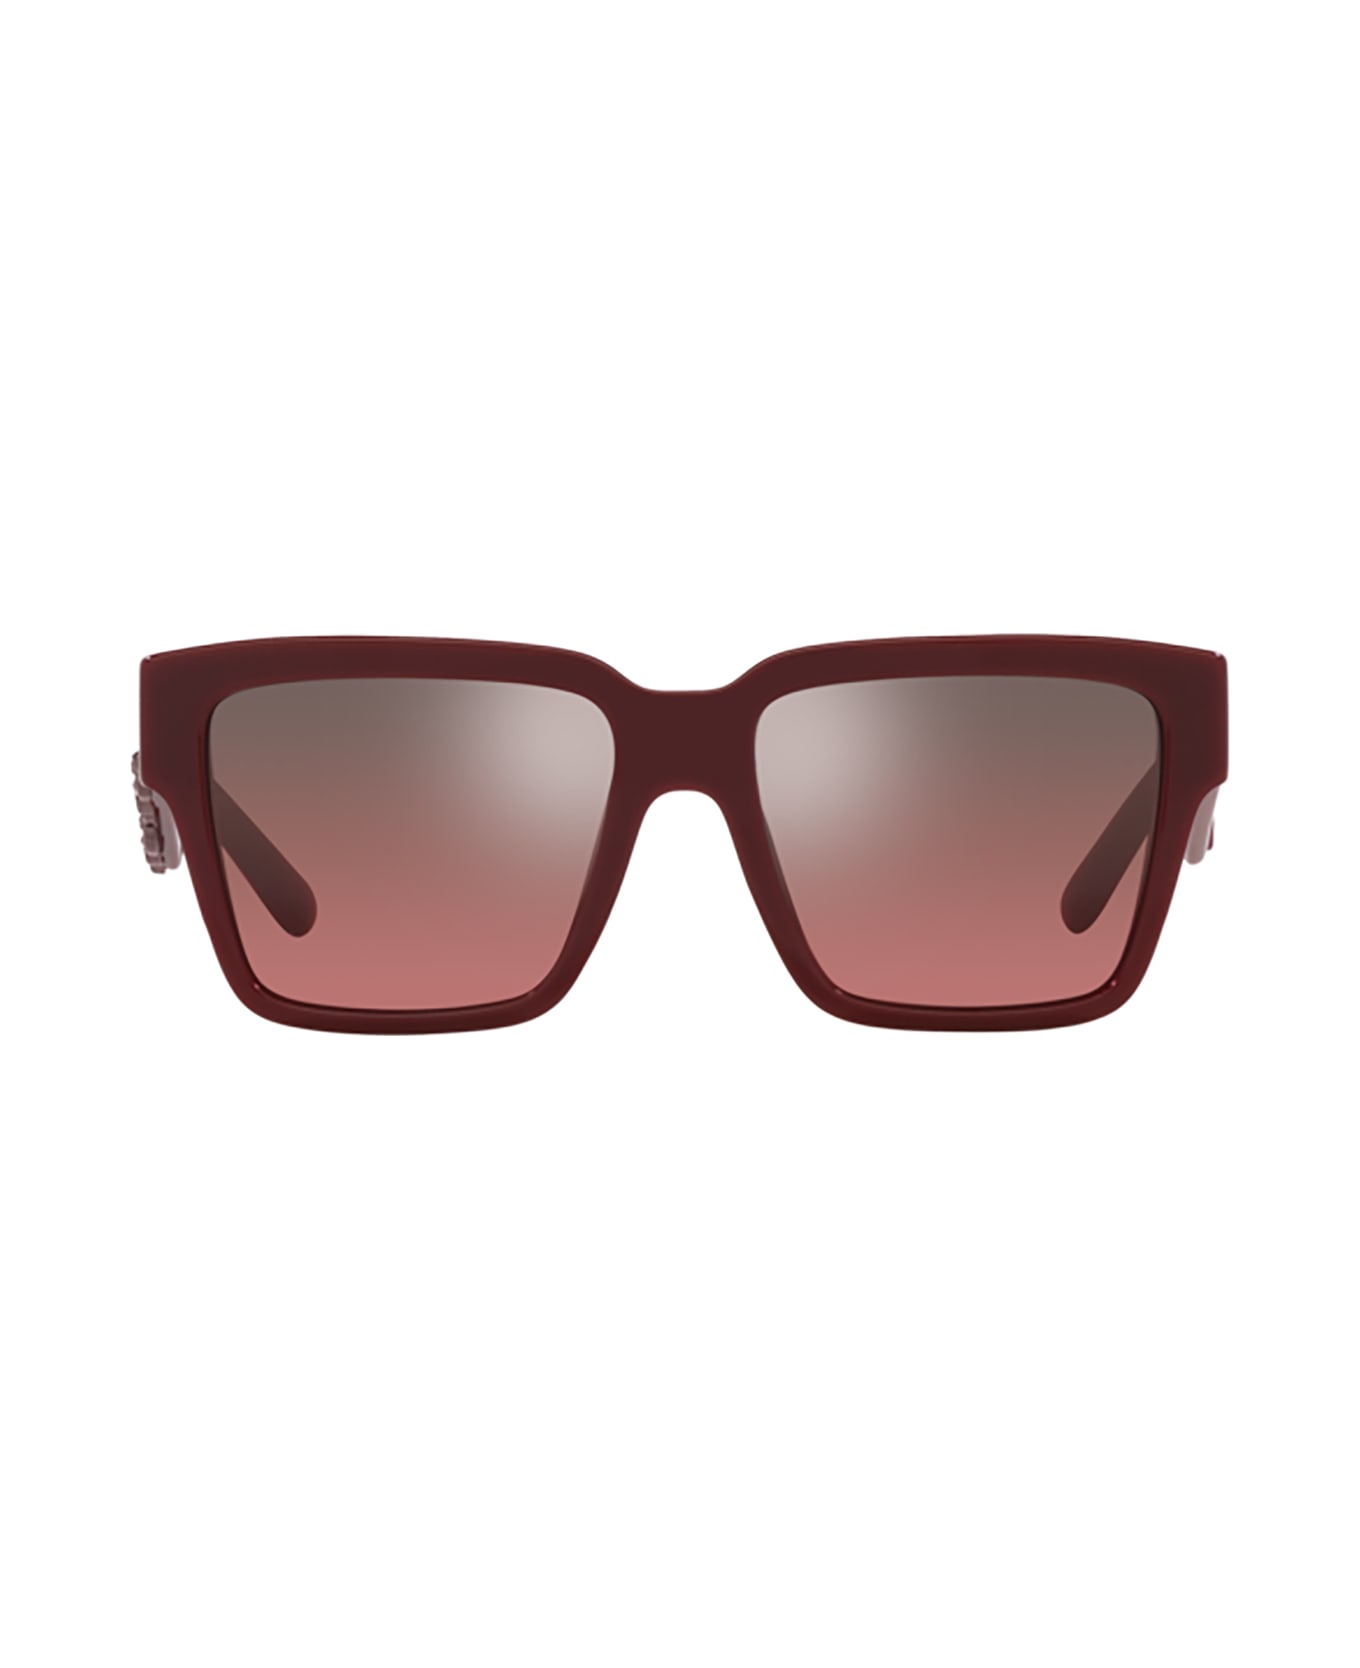 Dolce & Gabbana Eyewear Dg4436 Bordeaux Sunglasses - Bordeaux サングラス